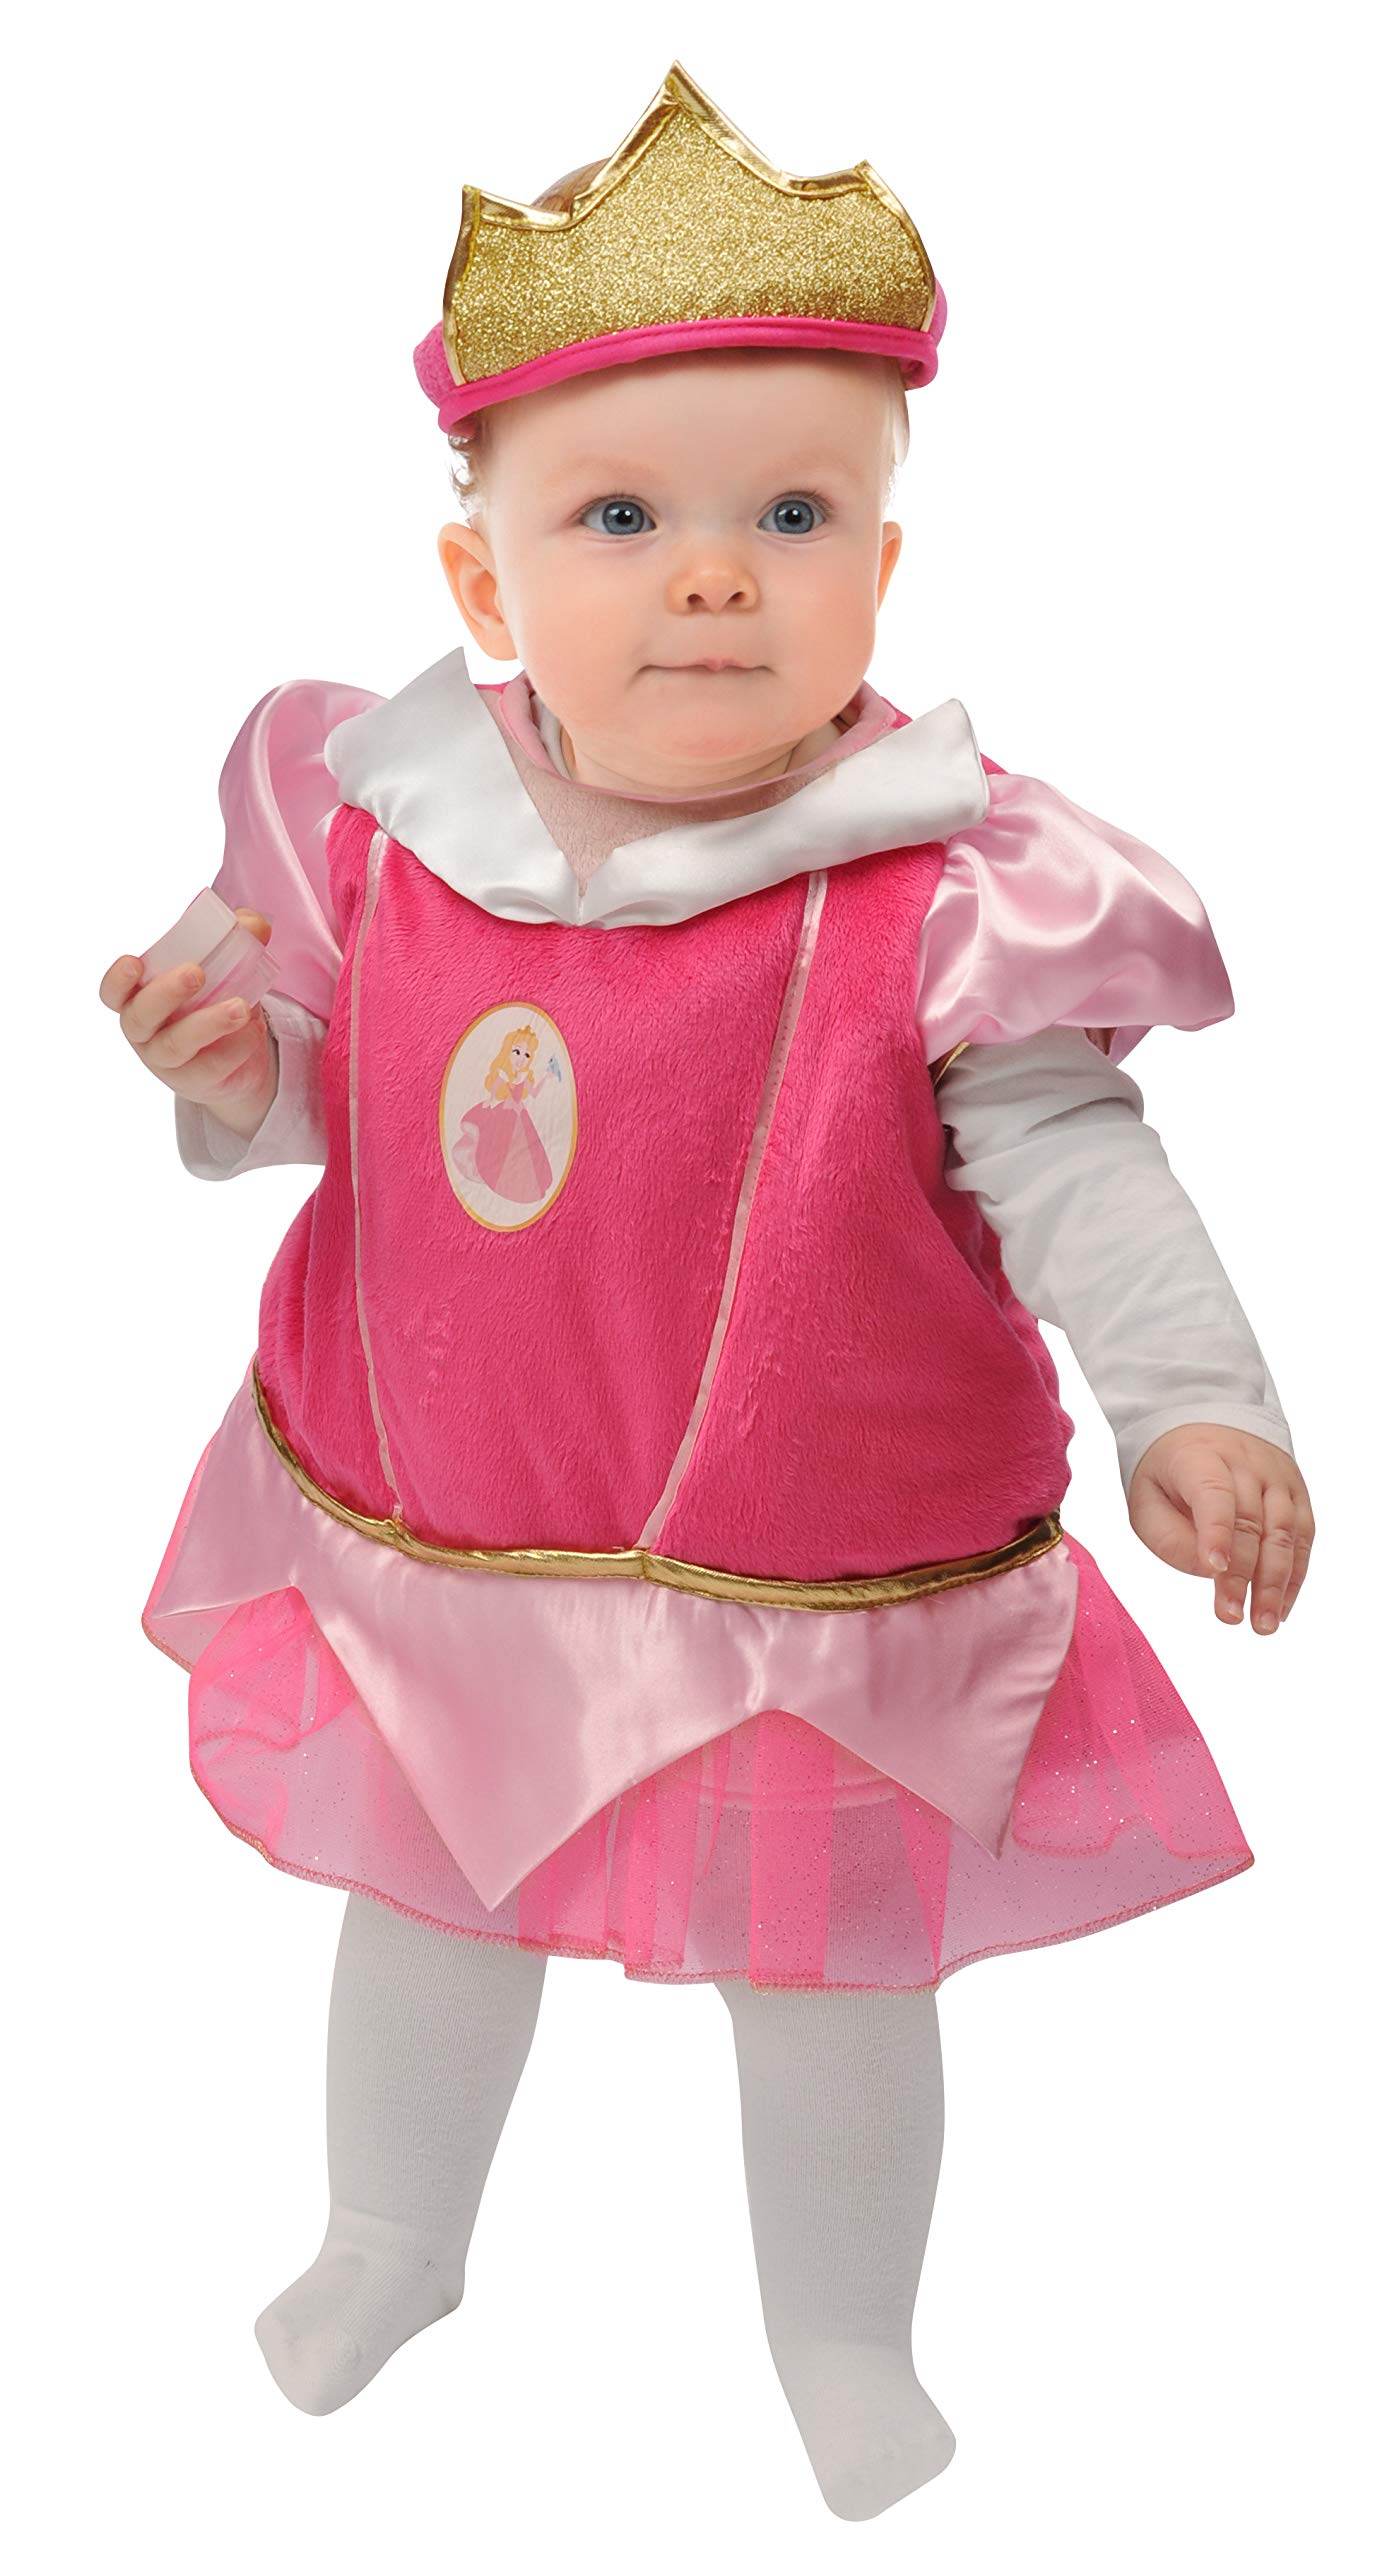 Ciao 11259.6-12 Disney Princess Disguise, Girls, Pink, 6-12 months